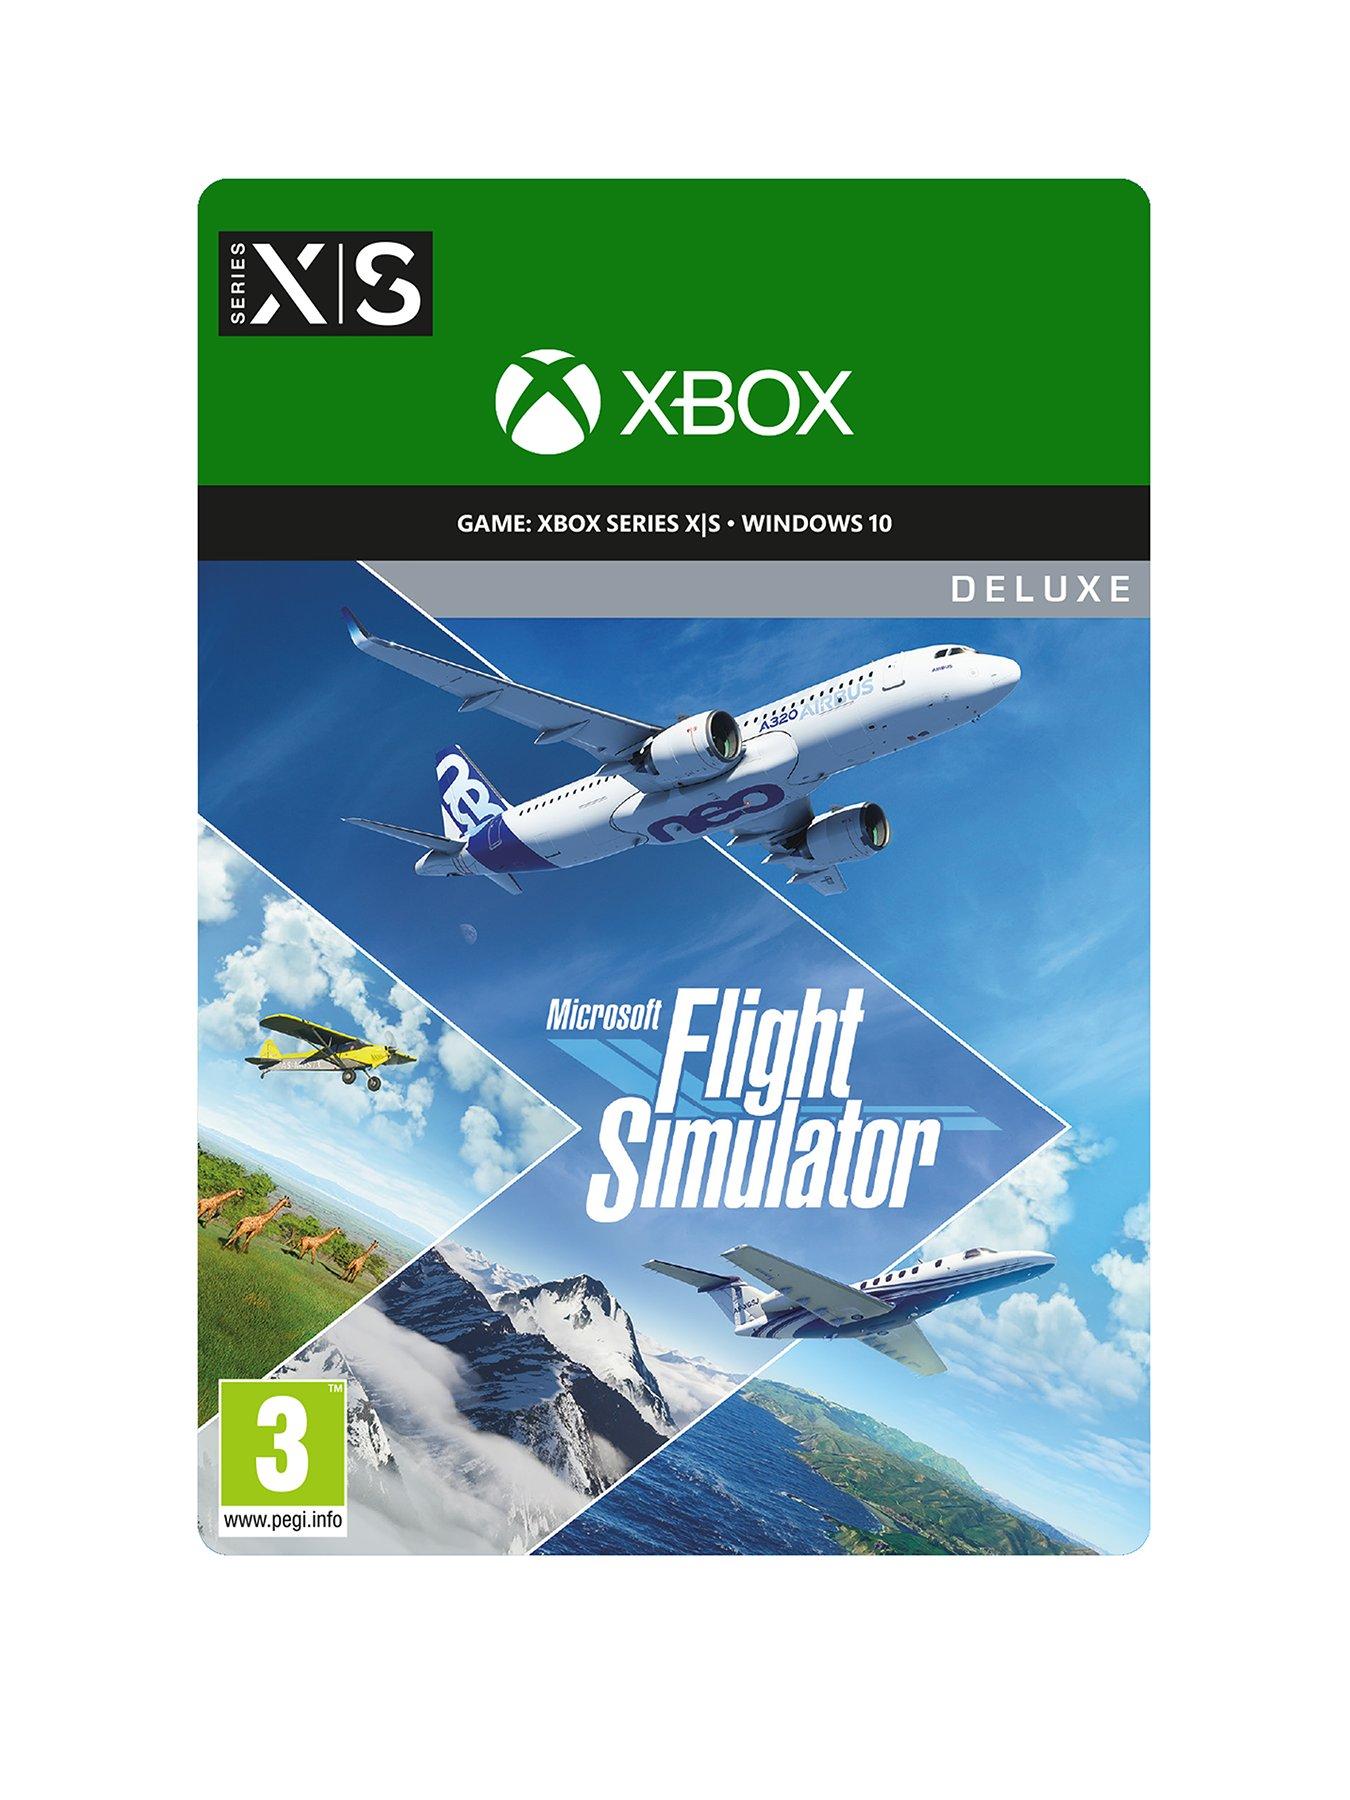 Microsoft Flight Simulator: Deluxe Edition Xbox And PC Game